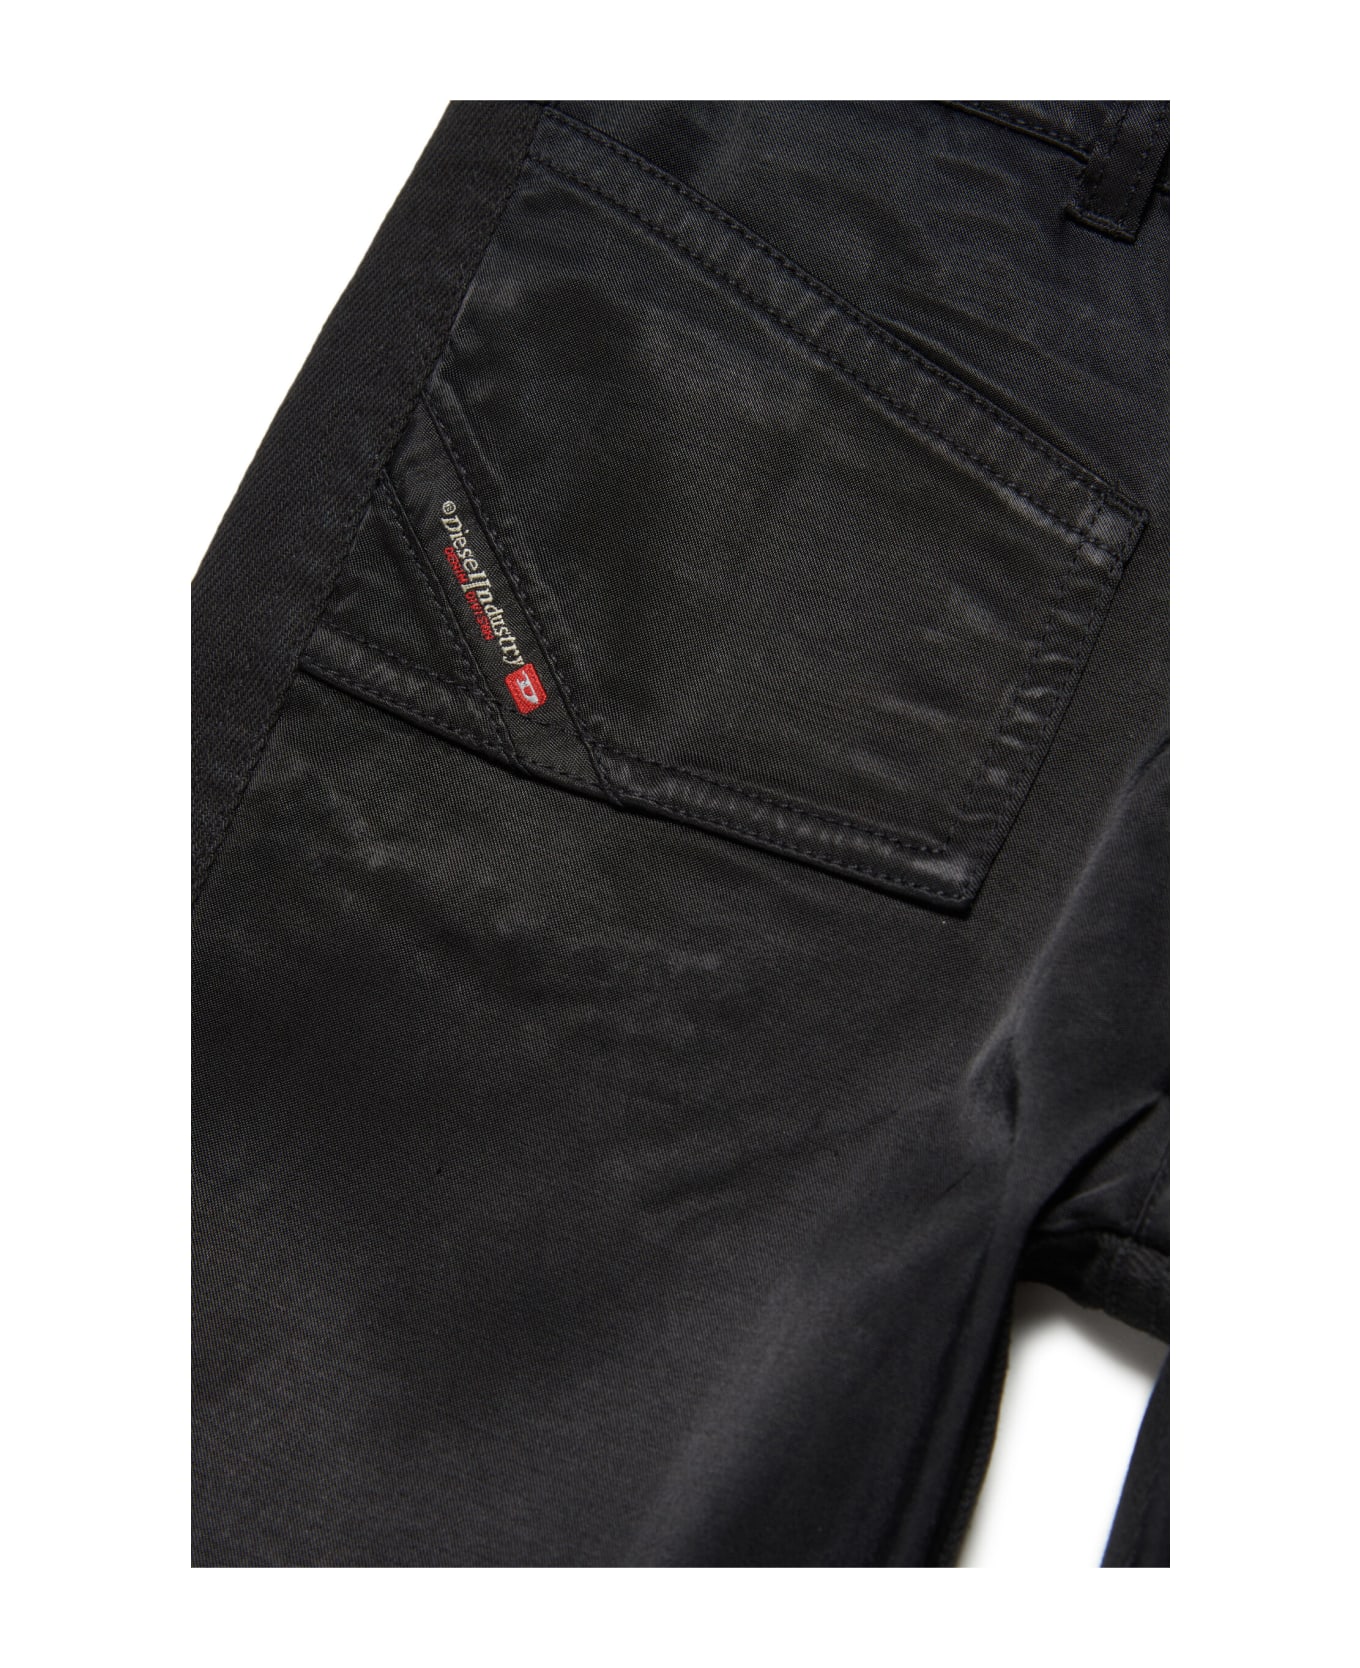 Diesel Peder Trousers Diesel Black Trousers In A Mix Of Fabrics - Black